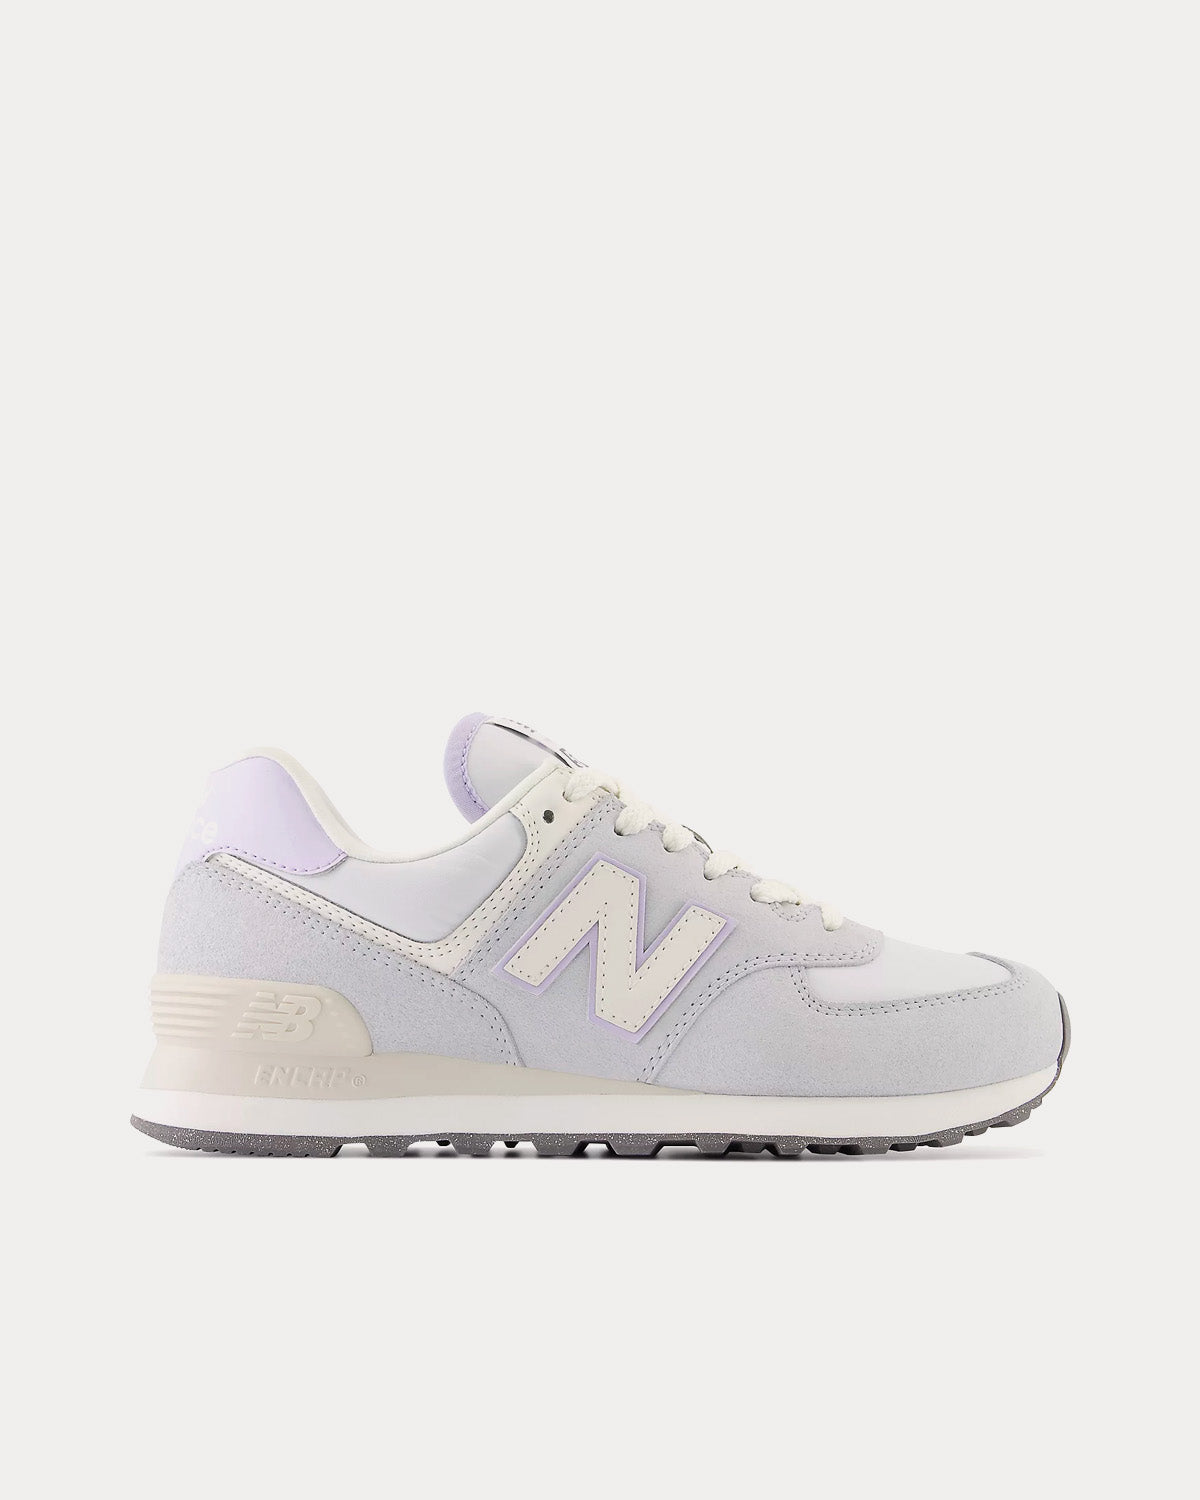 New Balance - 574 Granite / Bright Lavender / Quartz Grey Low Top Sneakers